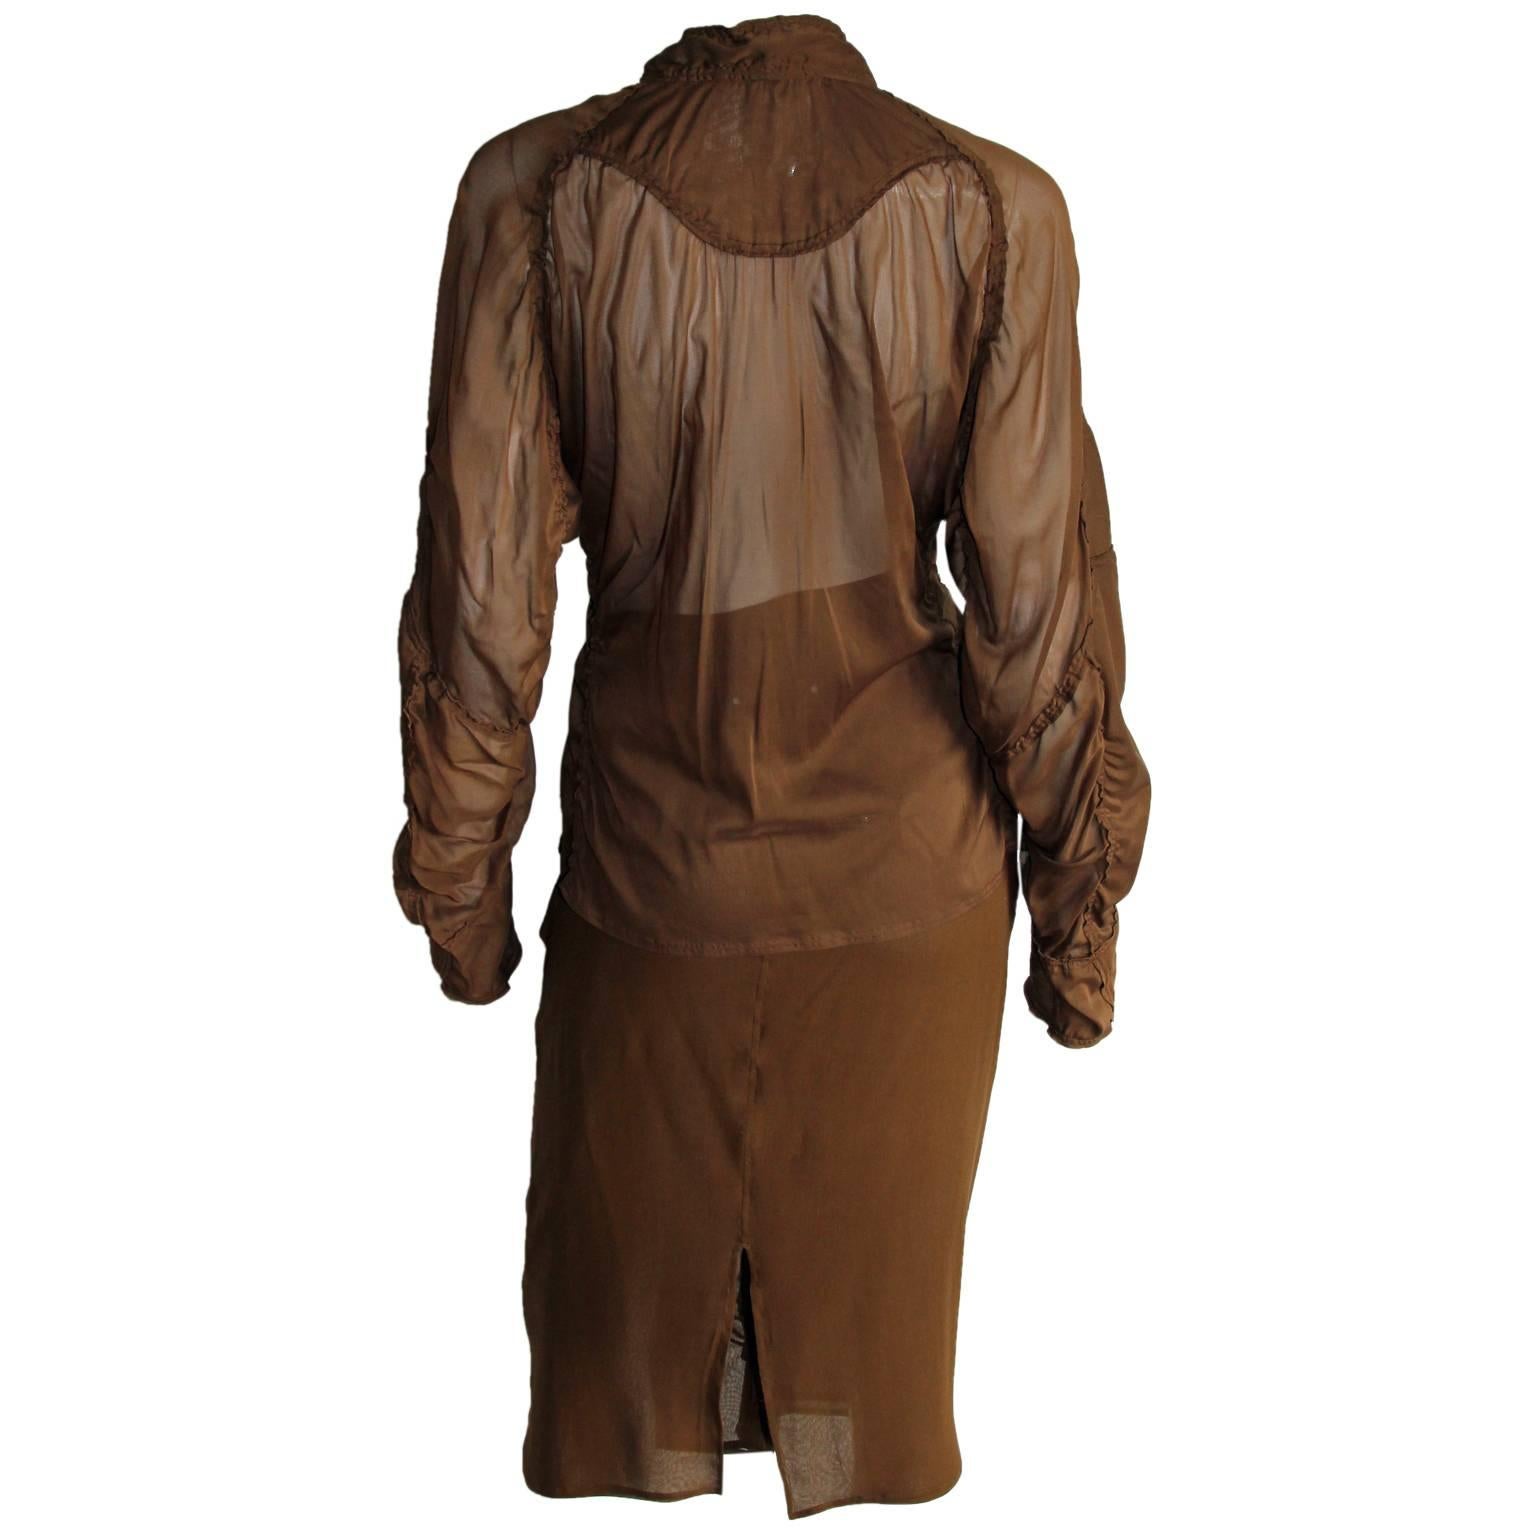 Rare & Iconic Tom Ford For YSL Rive Gauche Spring Summer 2002 Brown Silk Safari Collection Runway Jacket & Skirt Suit!

Iconic brown silk chiffon jacket & skirt suit from Tom Ford's acclaimed Spring/Summer 2002 Safari/Mombasa Runway